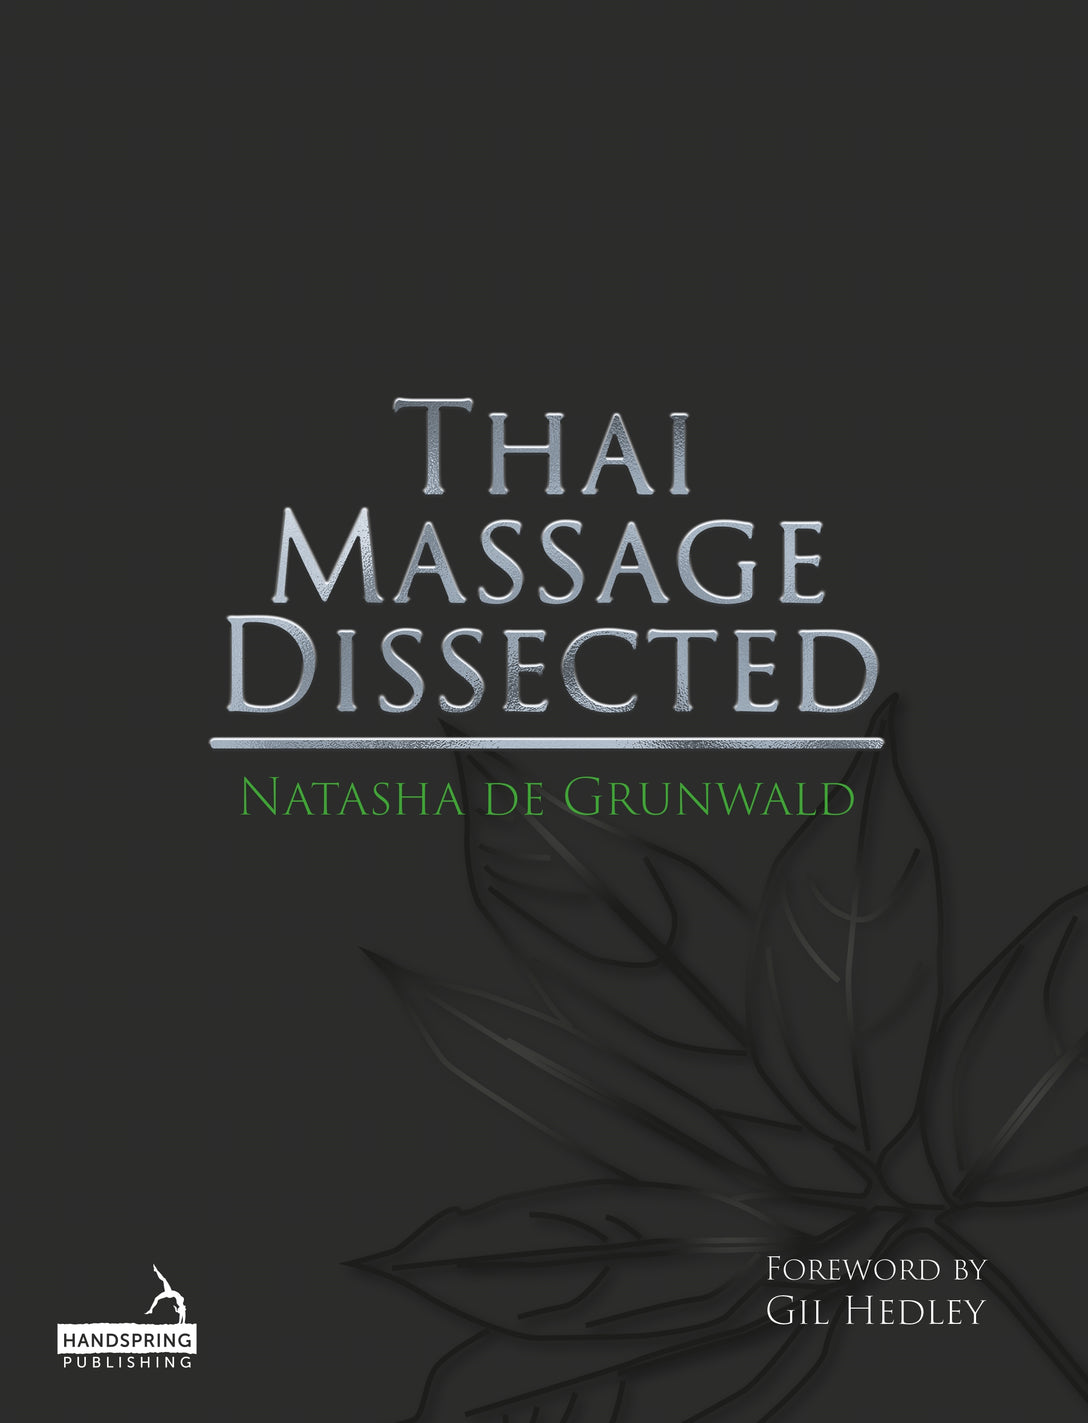 Thai Massage Dissected by Natasha de Grunwald